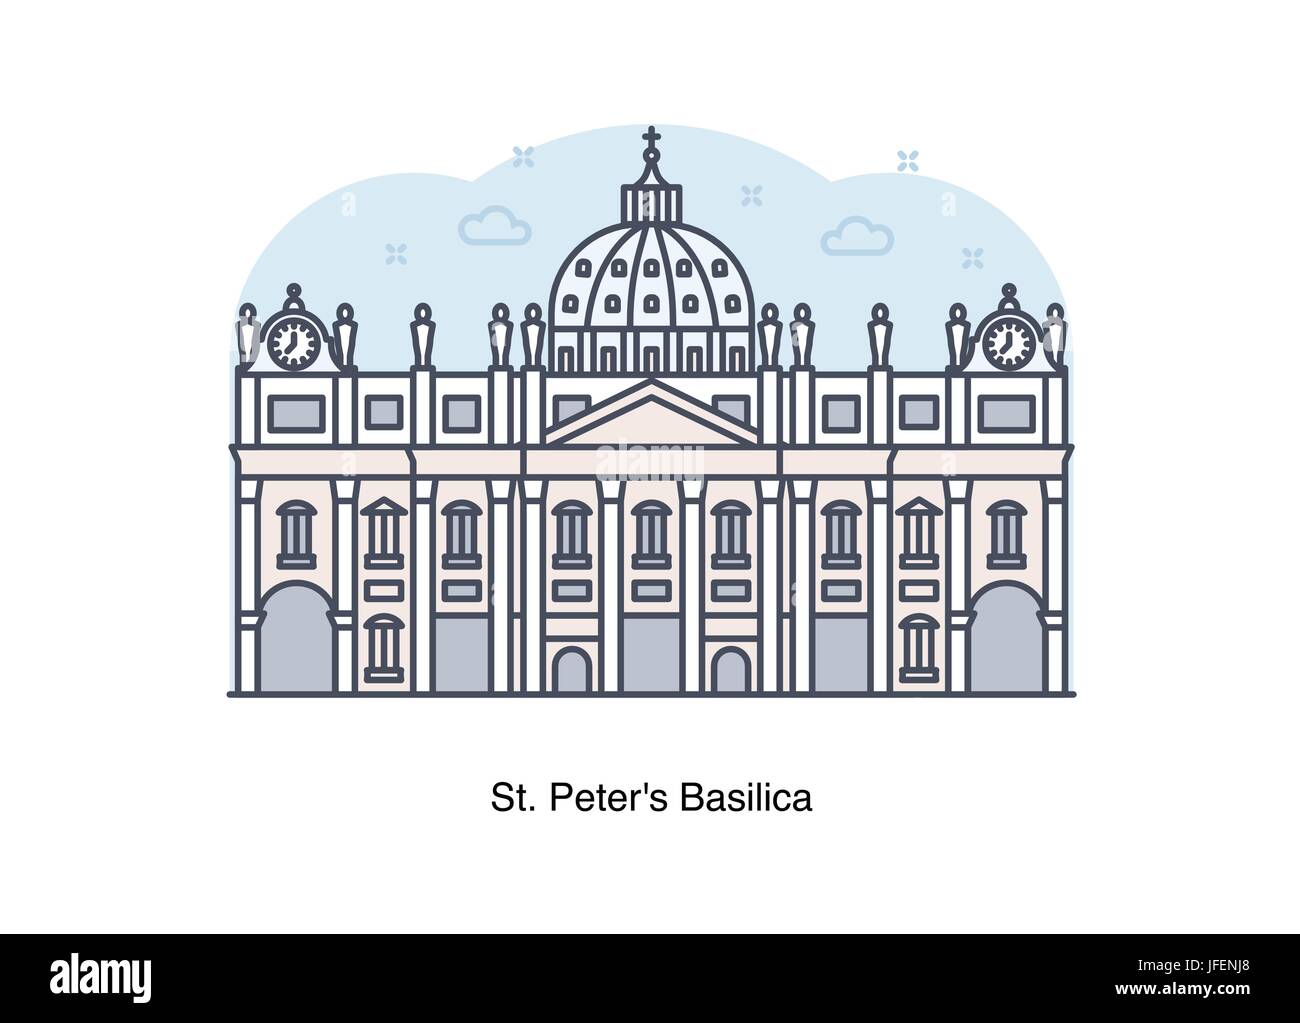 Premium Vector | St peter039s basilica vatican city illustration